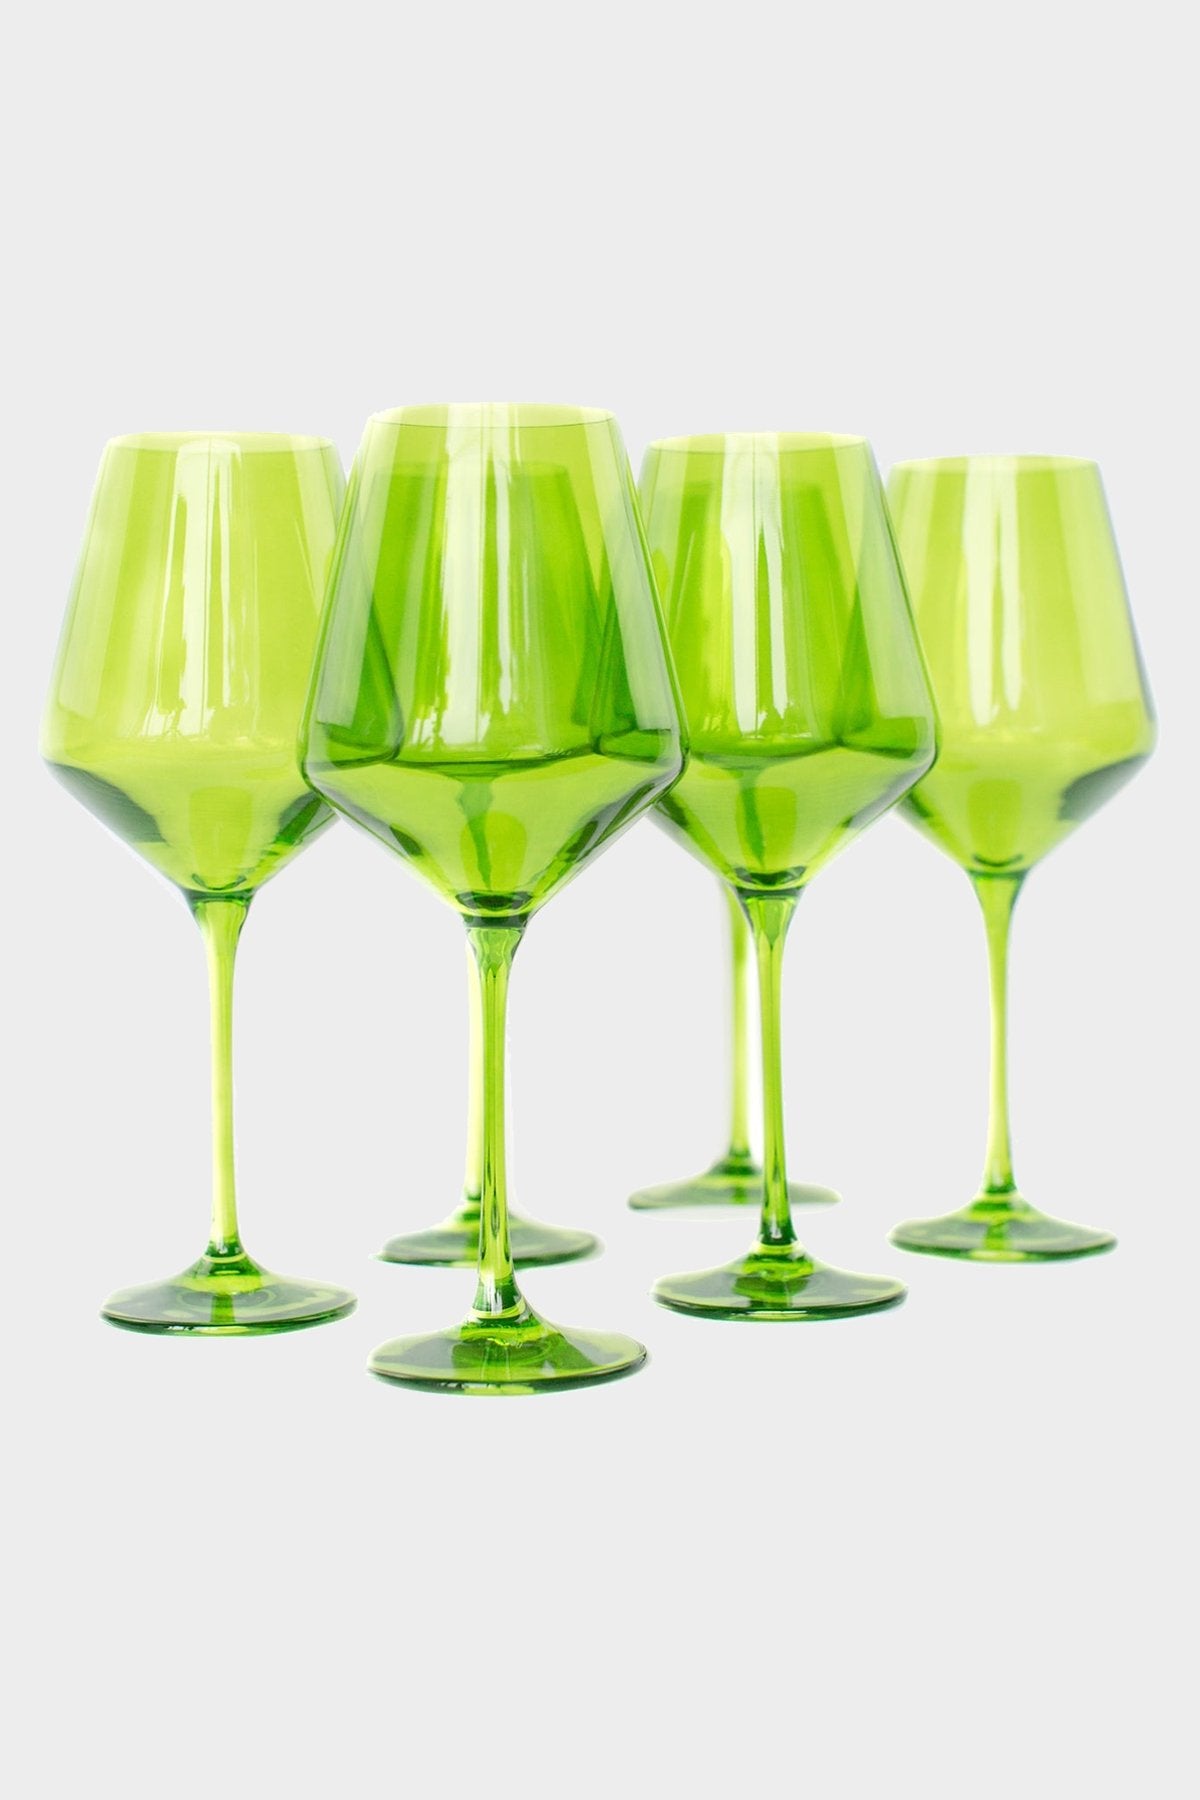 Wine Stemware Glass in Forest Green - Set of 6 - shop-olivia.com